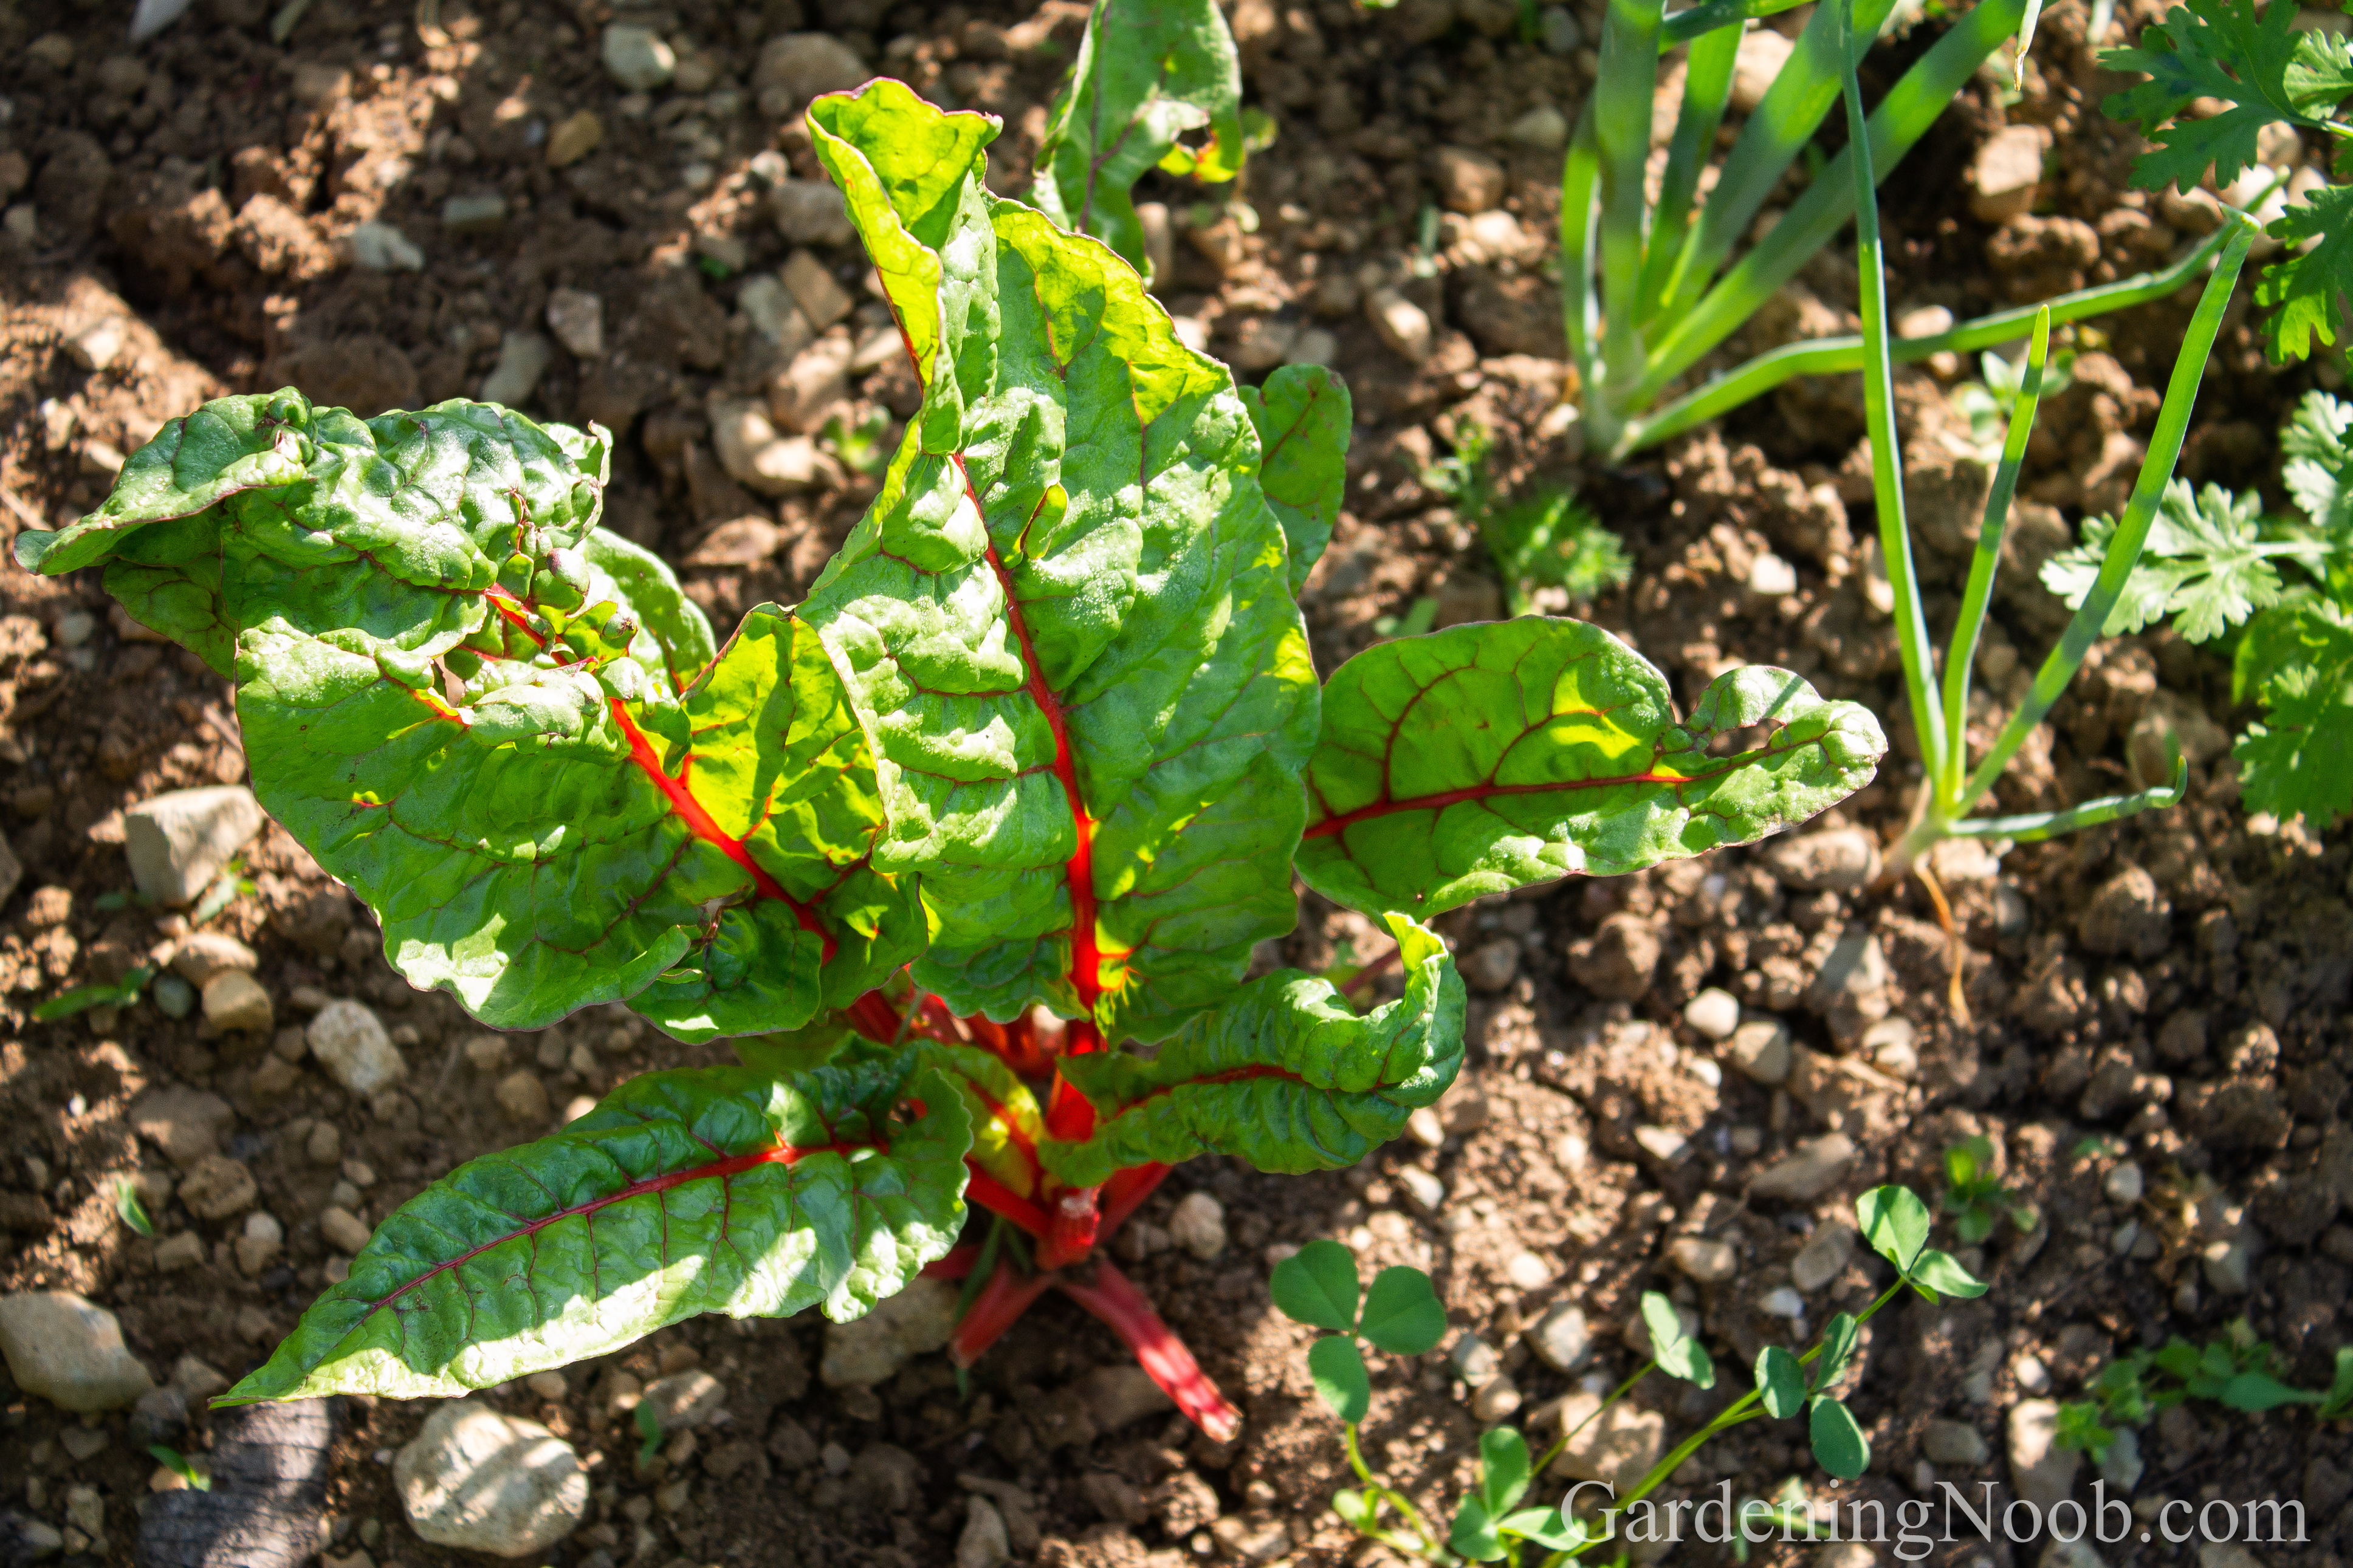 Rhubarb chard ready for picking.